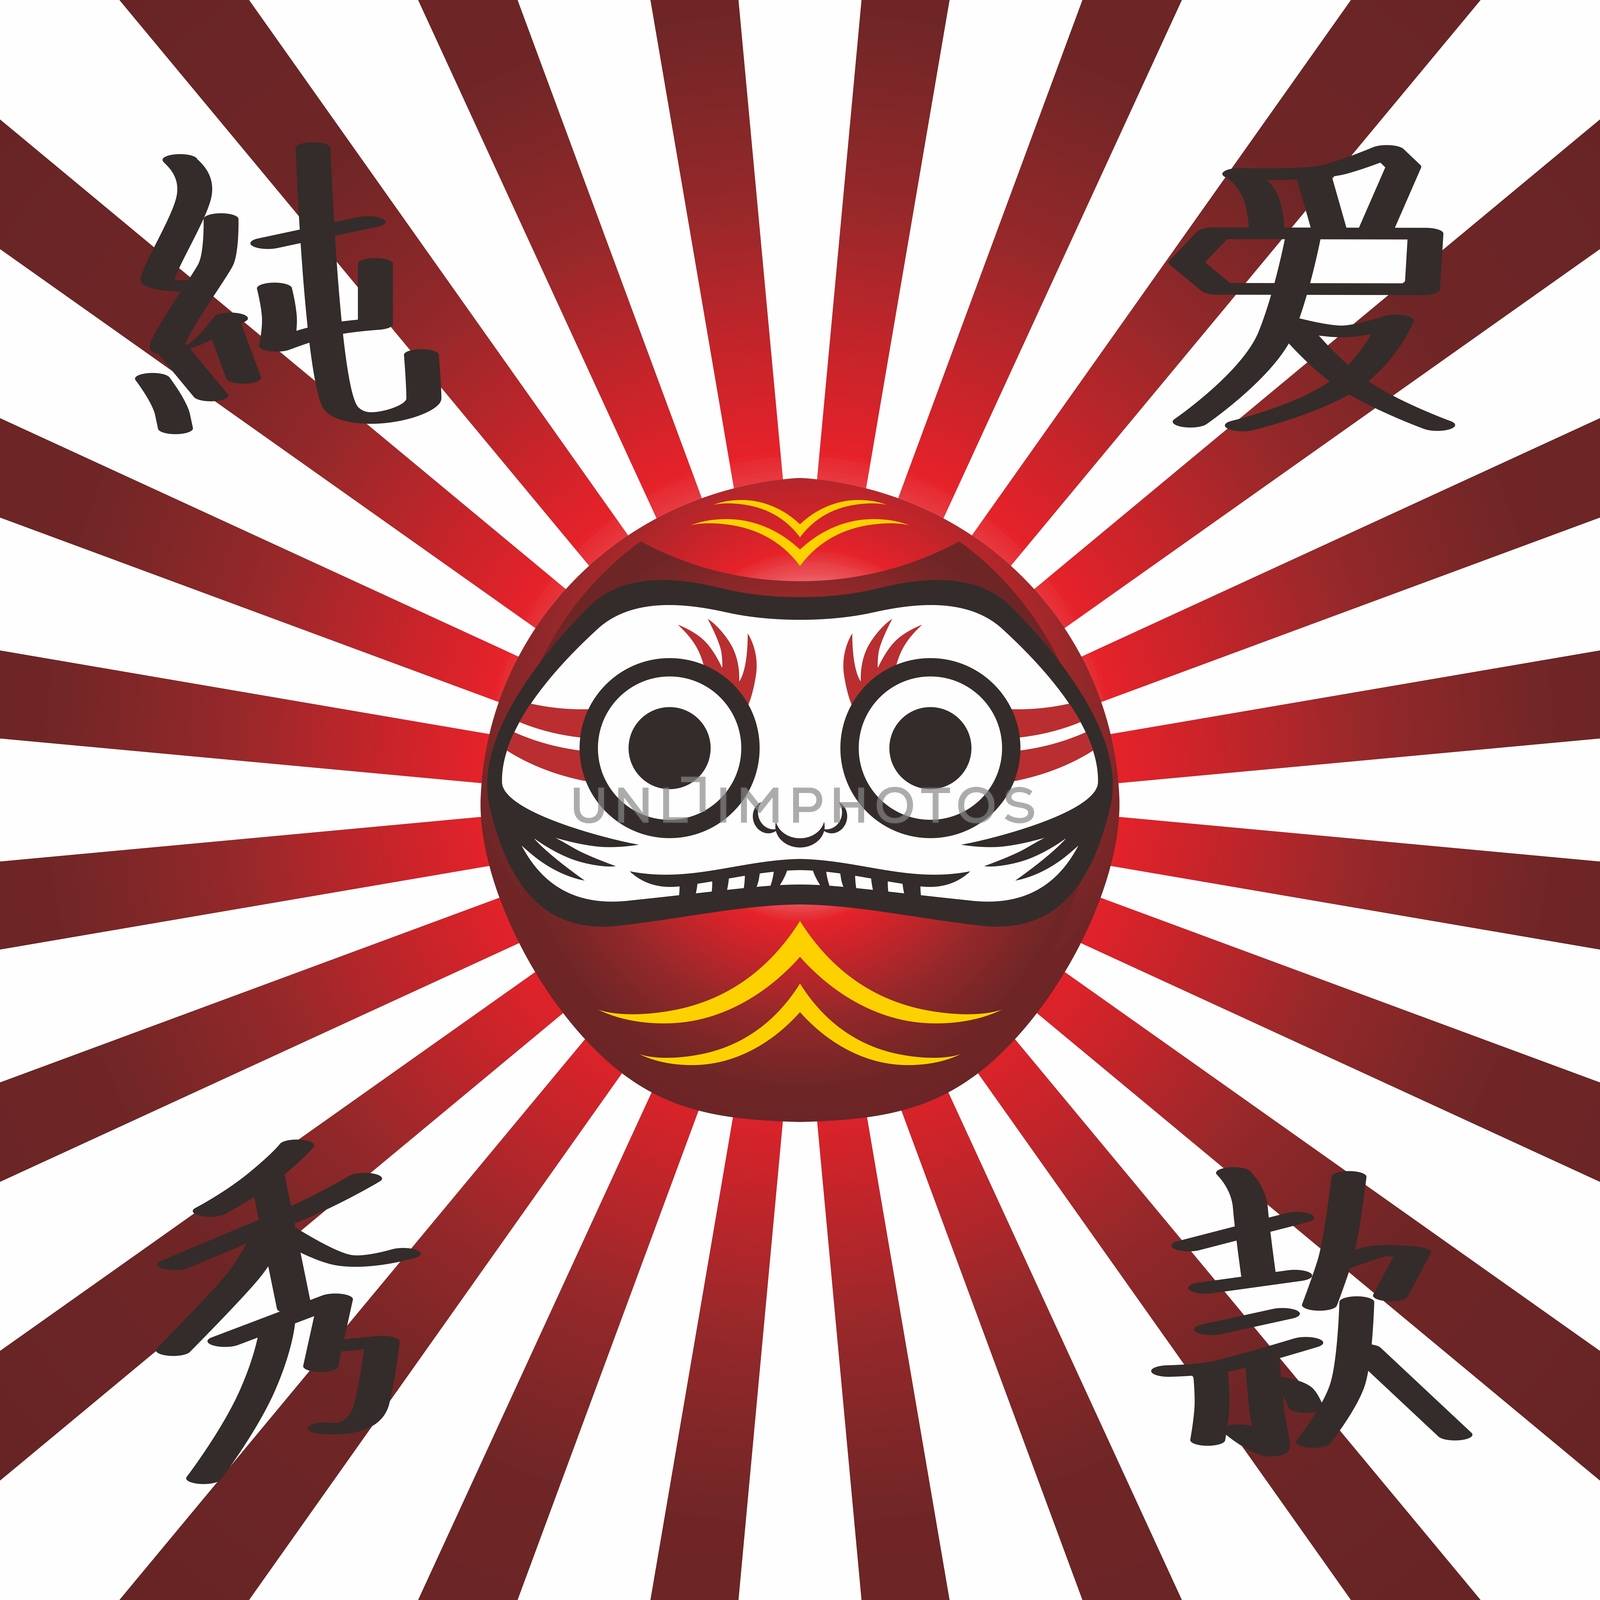 japan warrior doll character theme vector art illustration